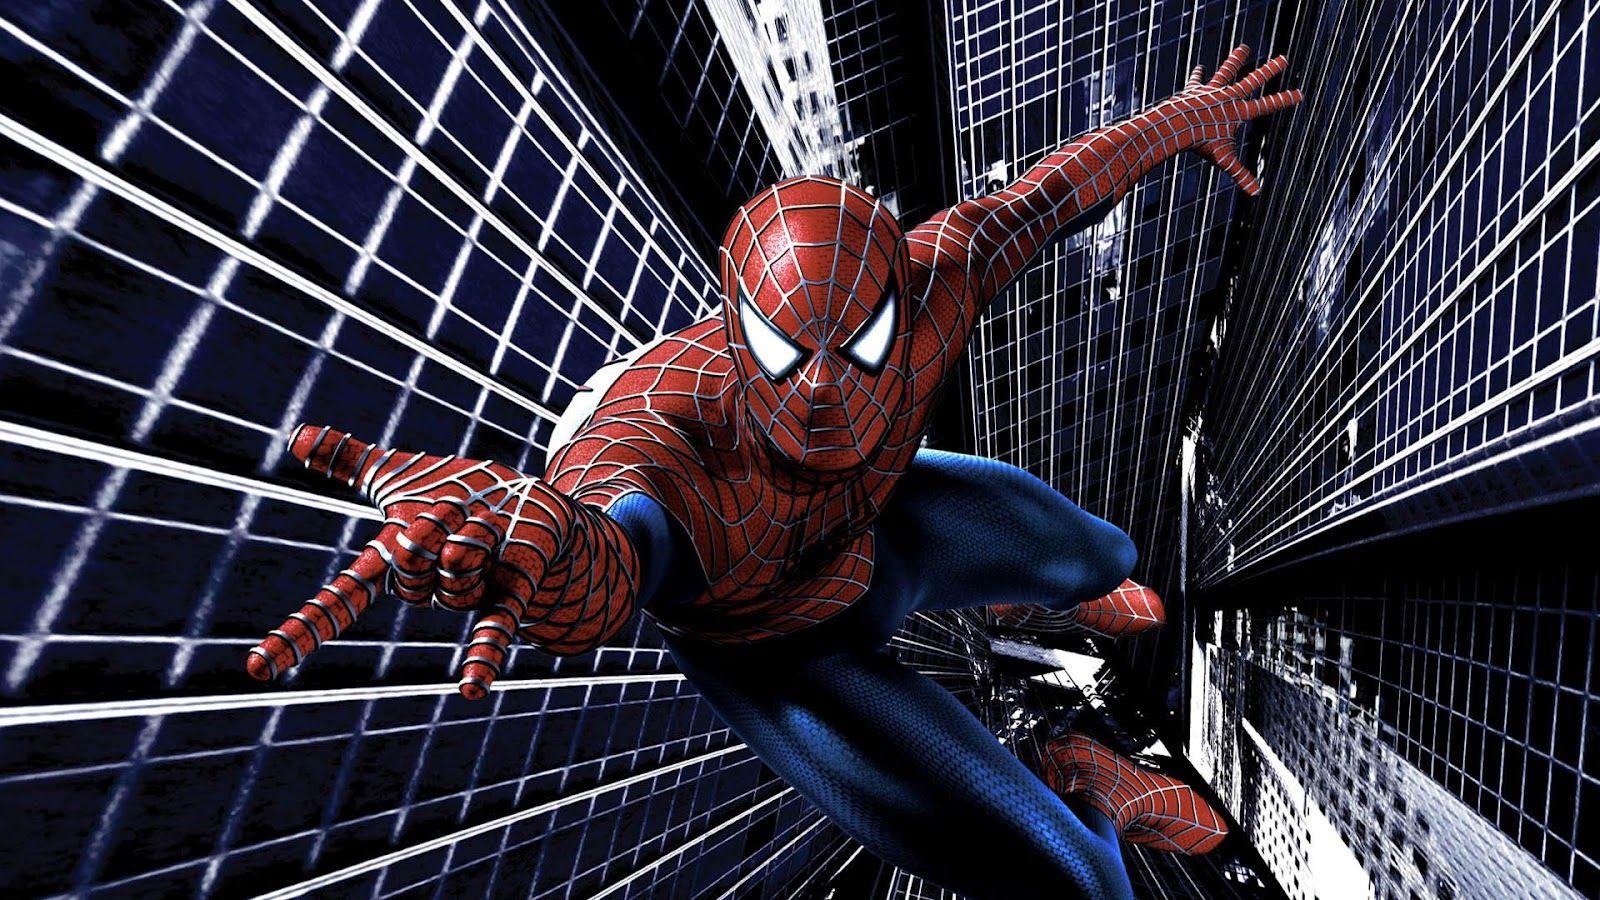 Nice Spider Man Wallpaper In HD #spiderman #wallpaper